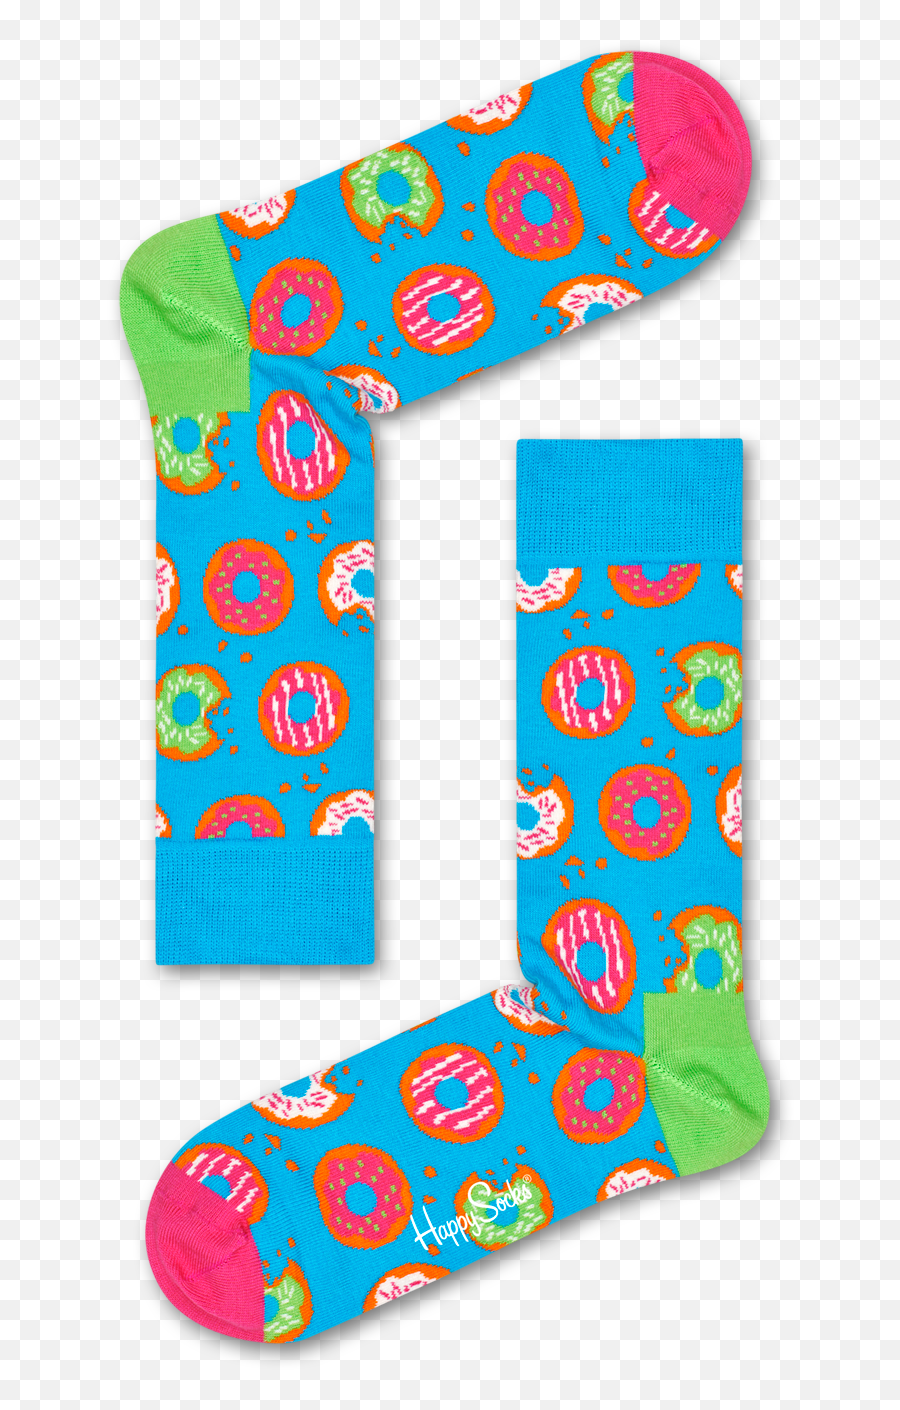 660 Cute U0026 Comfy Ideas In 2021 Cute Pajamas Lounge Wear - Skarpety Mskie W Koty Emoji,Fake Emoji Joggers